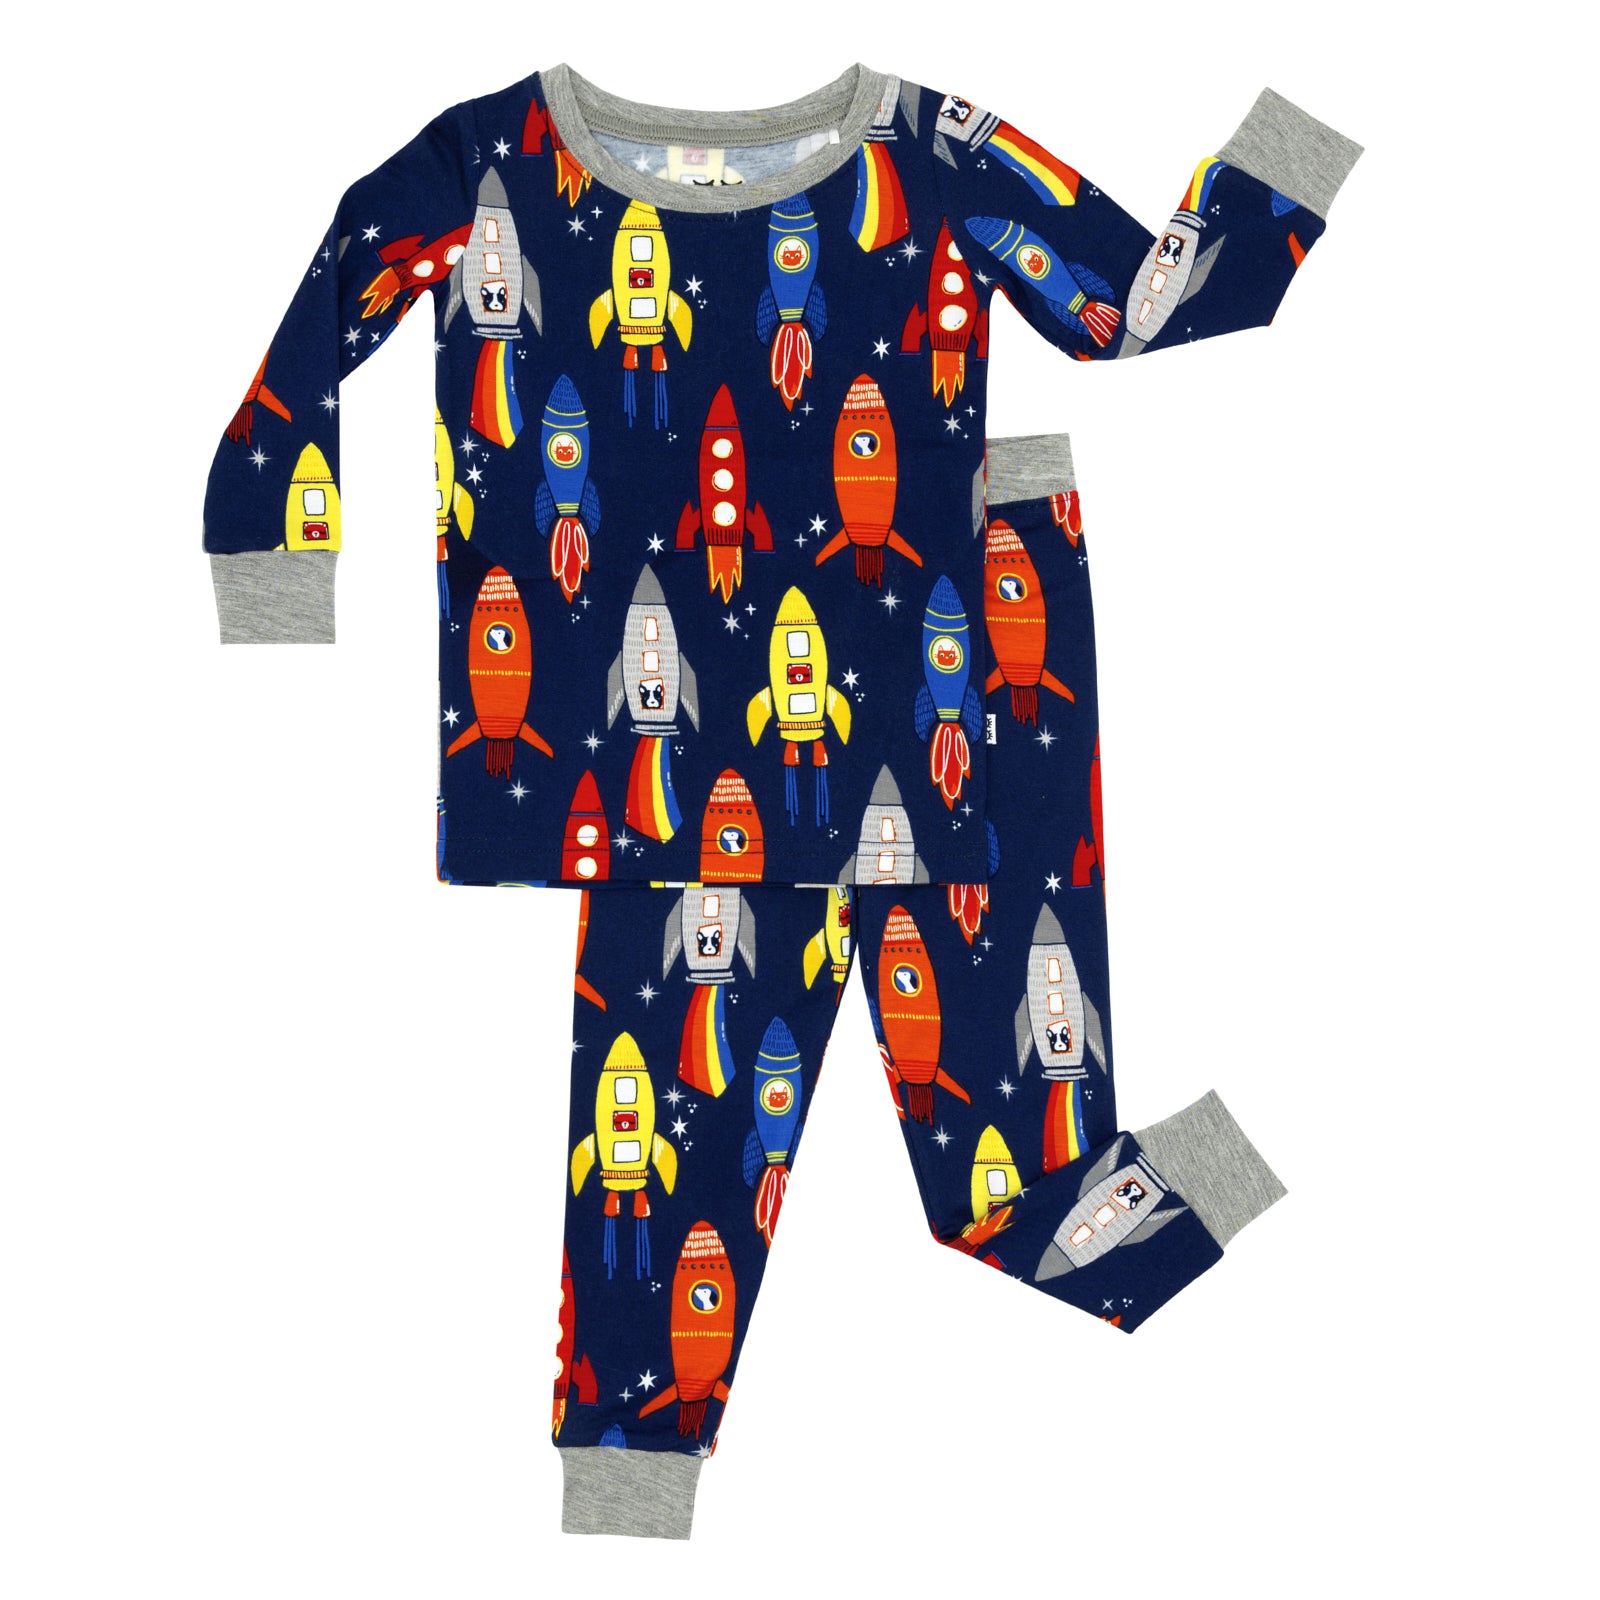 Flat lay image of Navy Space Explorer two piece pajama set